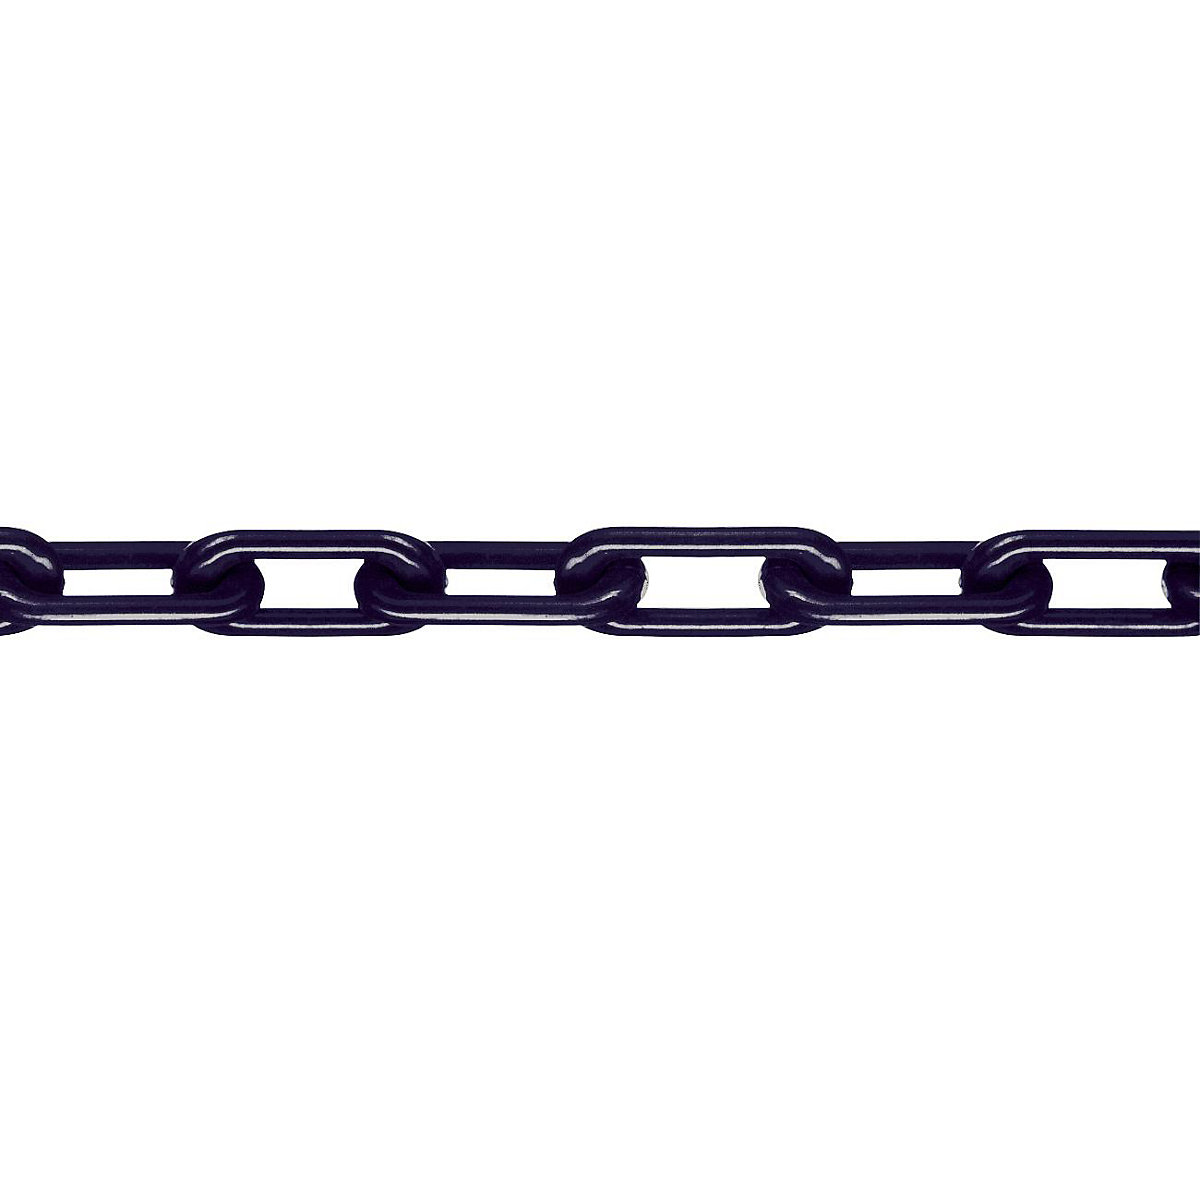 Nylon-kwaliteitsketting, MNK-kwaliteit 8, lengte 25 m, zwart, vanaf 4 st.-2